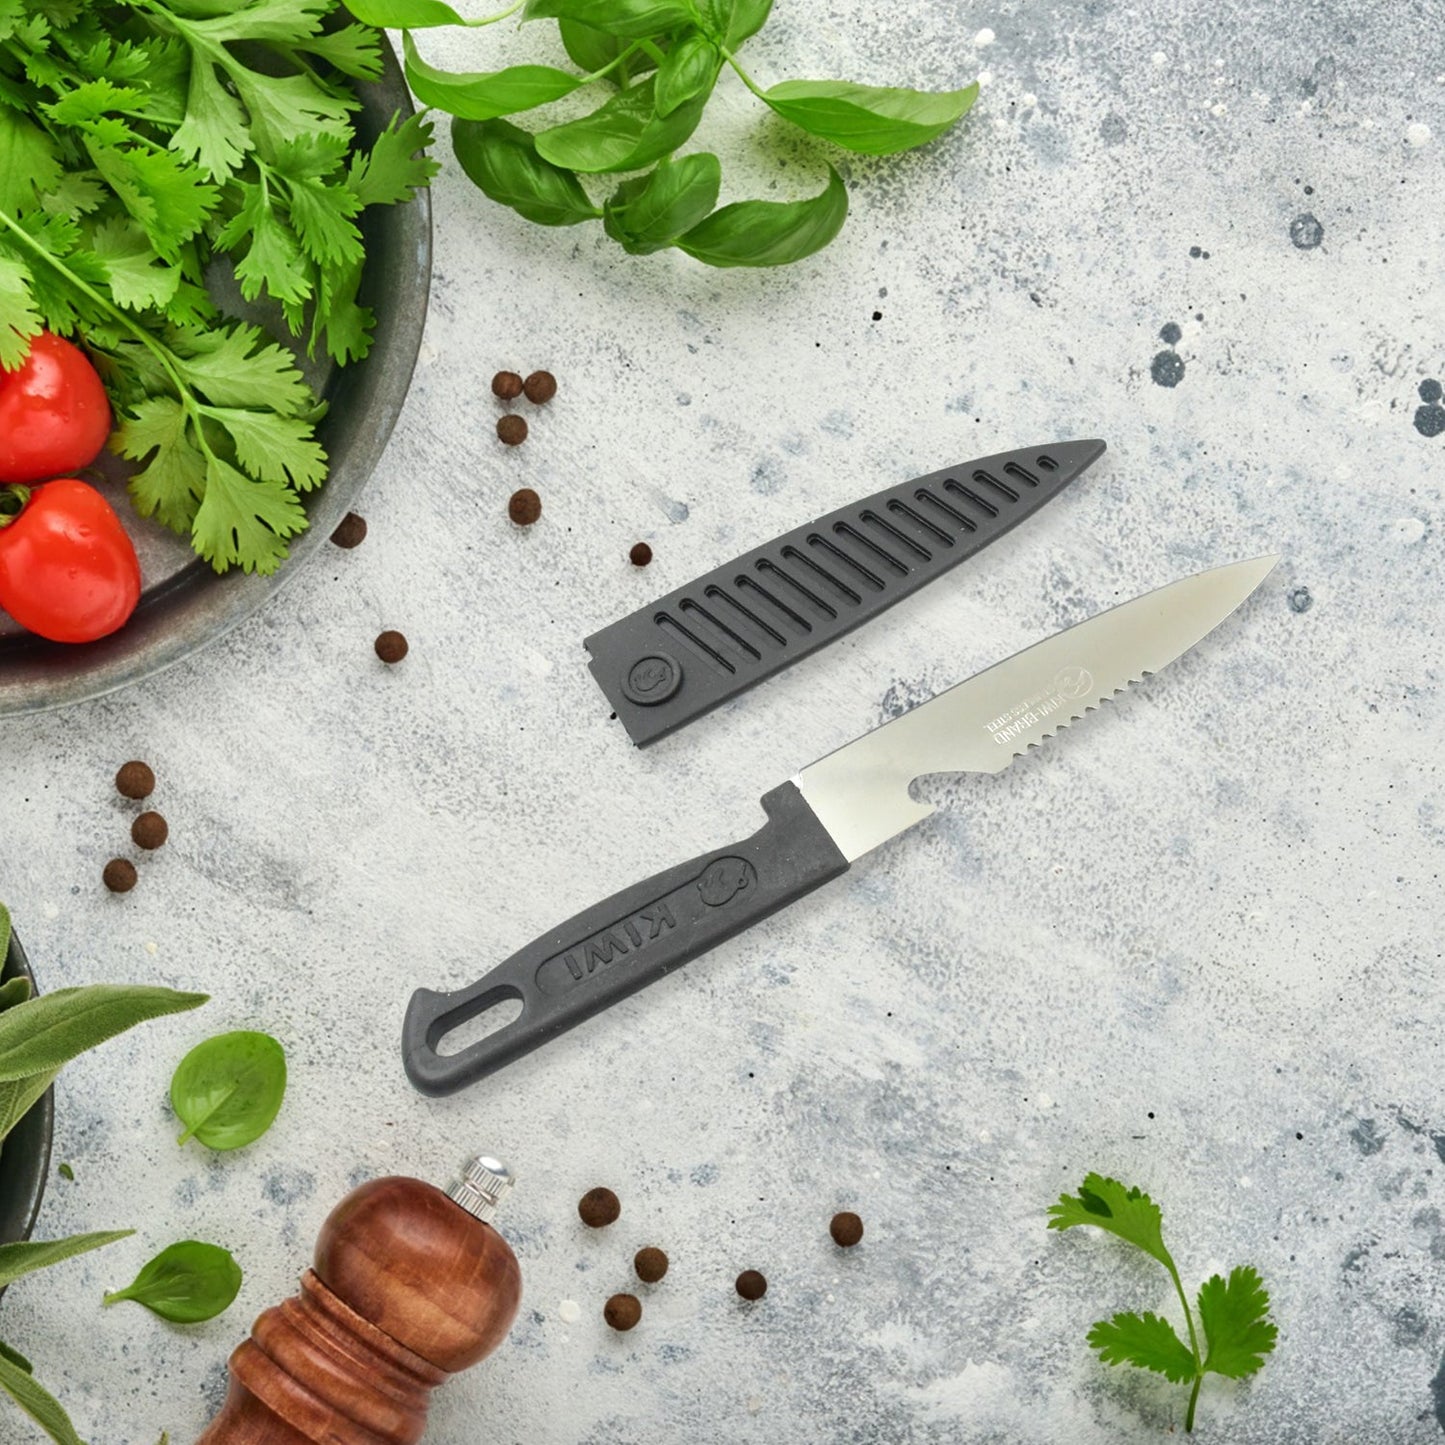 5813  Premium Plastic Chopping Board & Steel Knife Vegetable Chopping Board With Knife  Cutting Board for Kitchen Chopper Fruit and Vegetable Cutter Chopper Plastic (3 Pc Set)